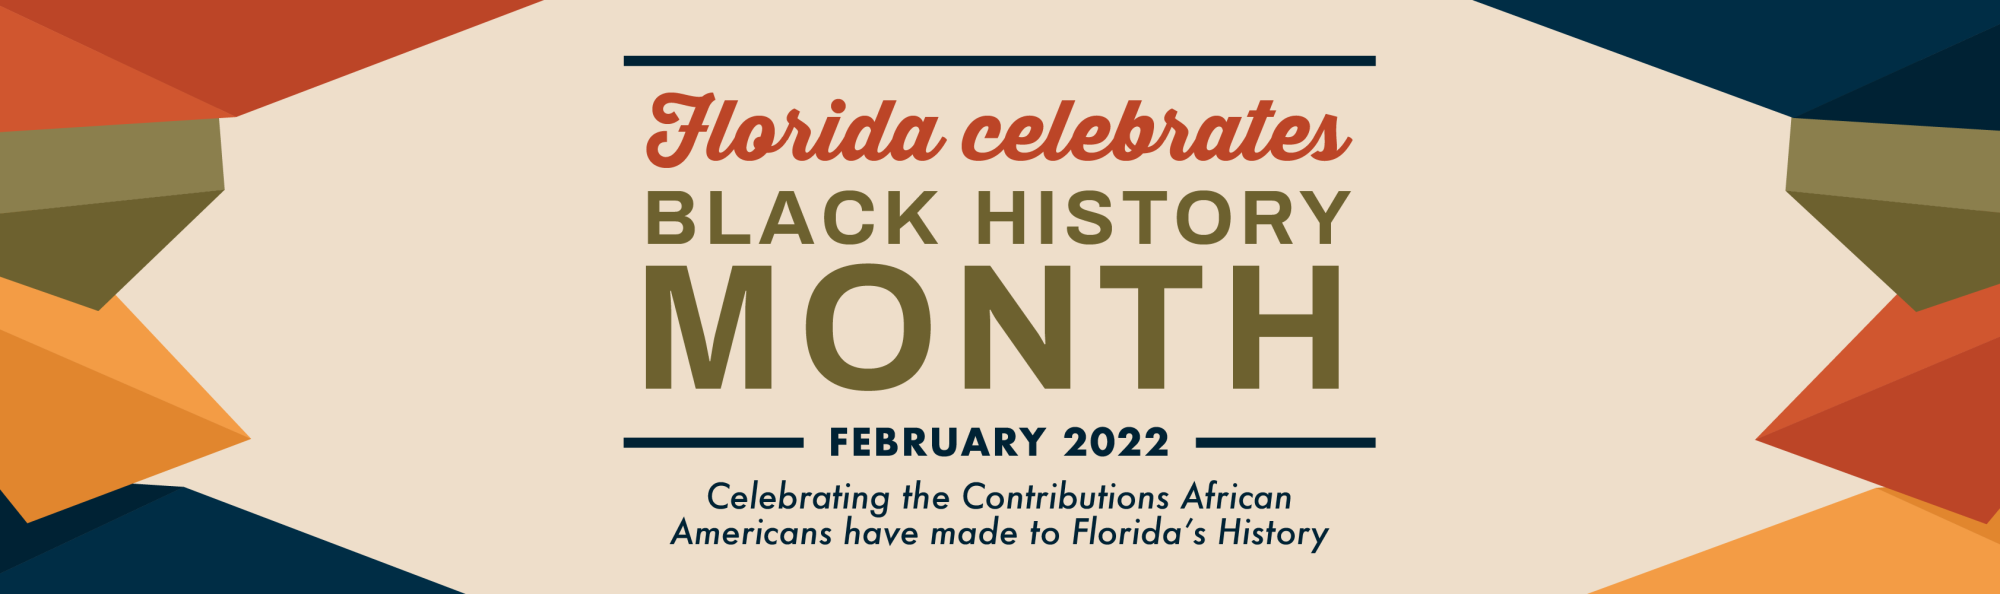 Florida Celebrates Black History Month